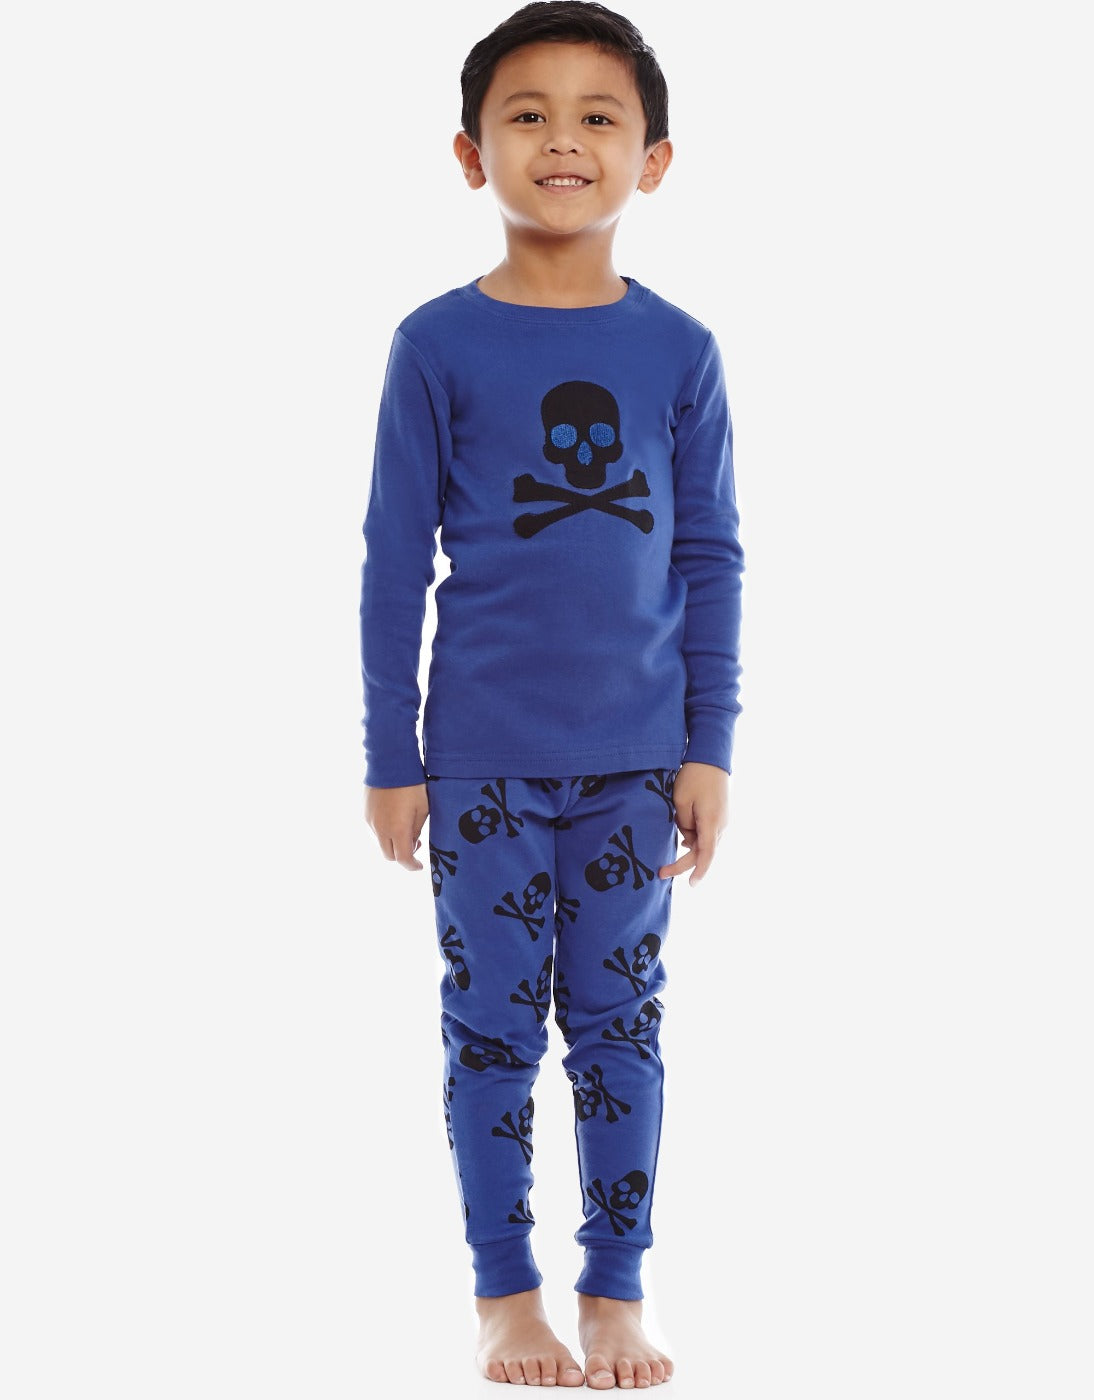 Leveret Kids & Toddler Pajamas Boys Girls Unisex 2 Piece Pjs Set 100% Cotton Halloween Sleepwear 12 Months-14 Years 